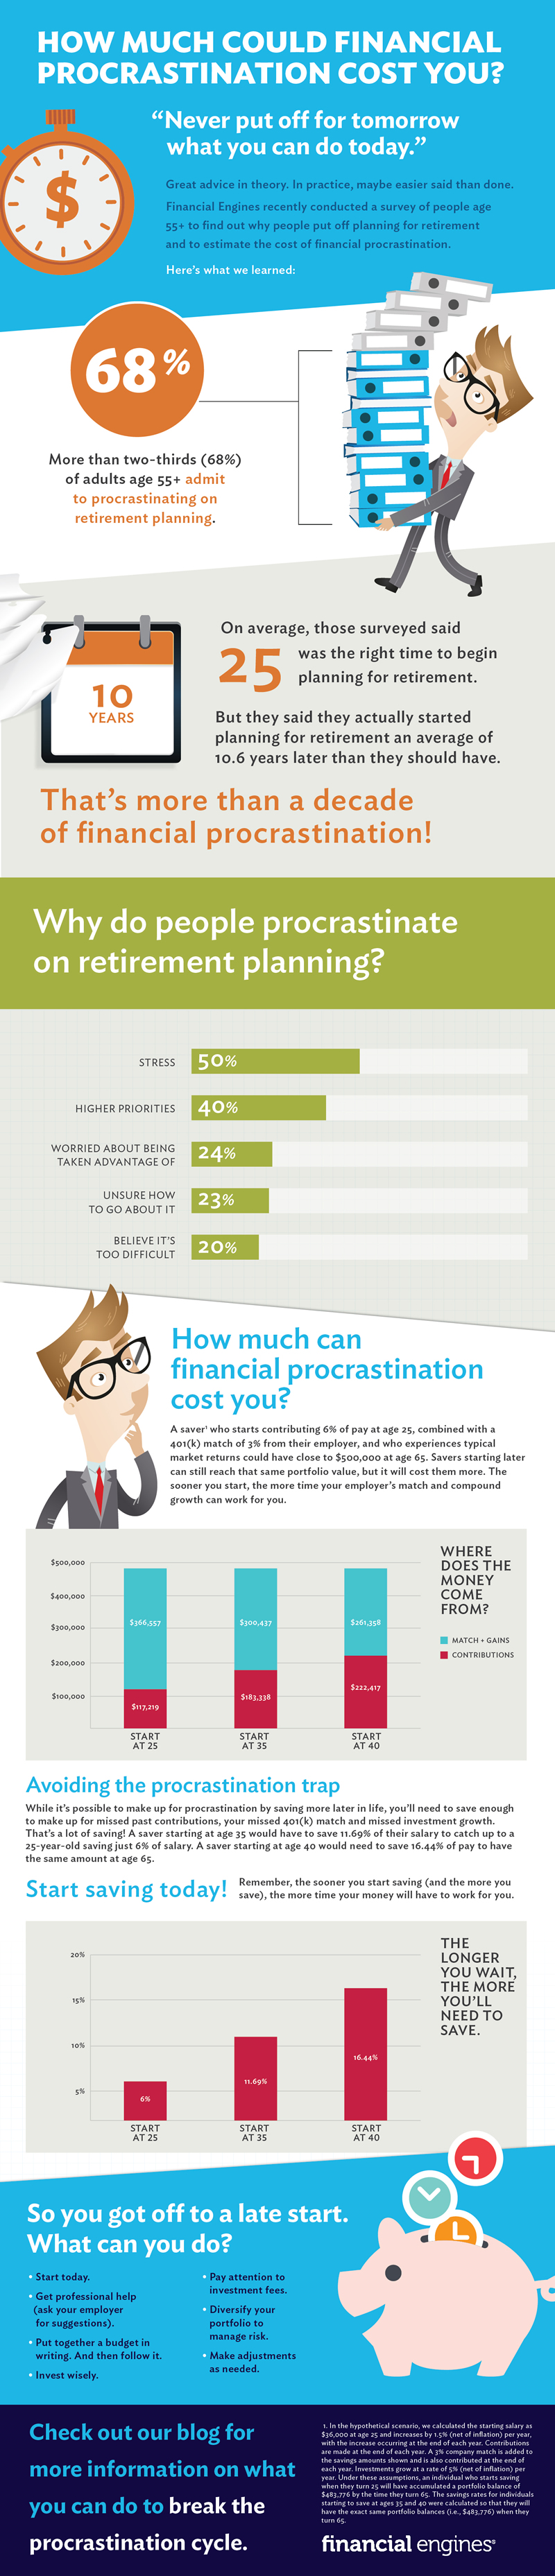 The Cost of Procrastination